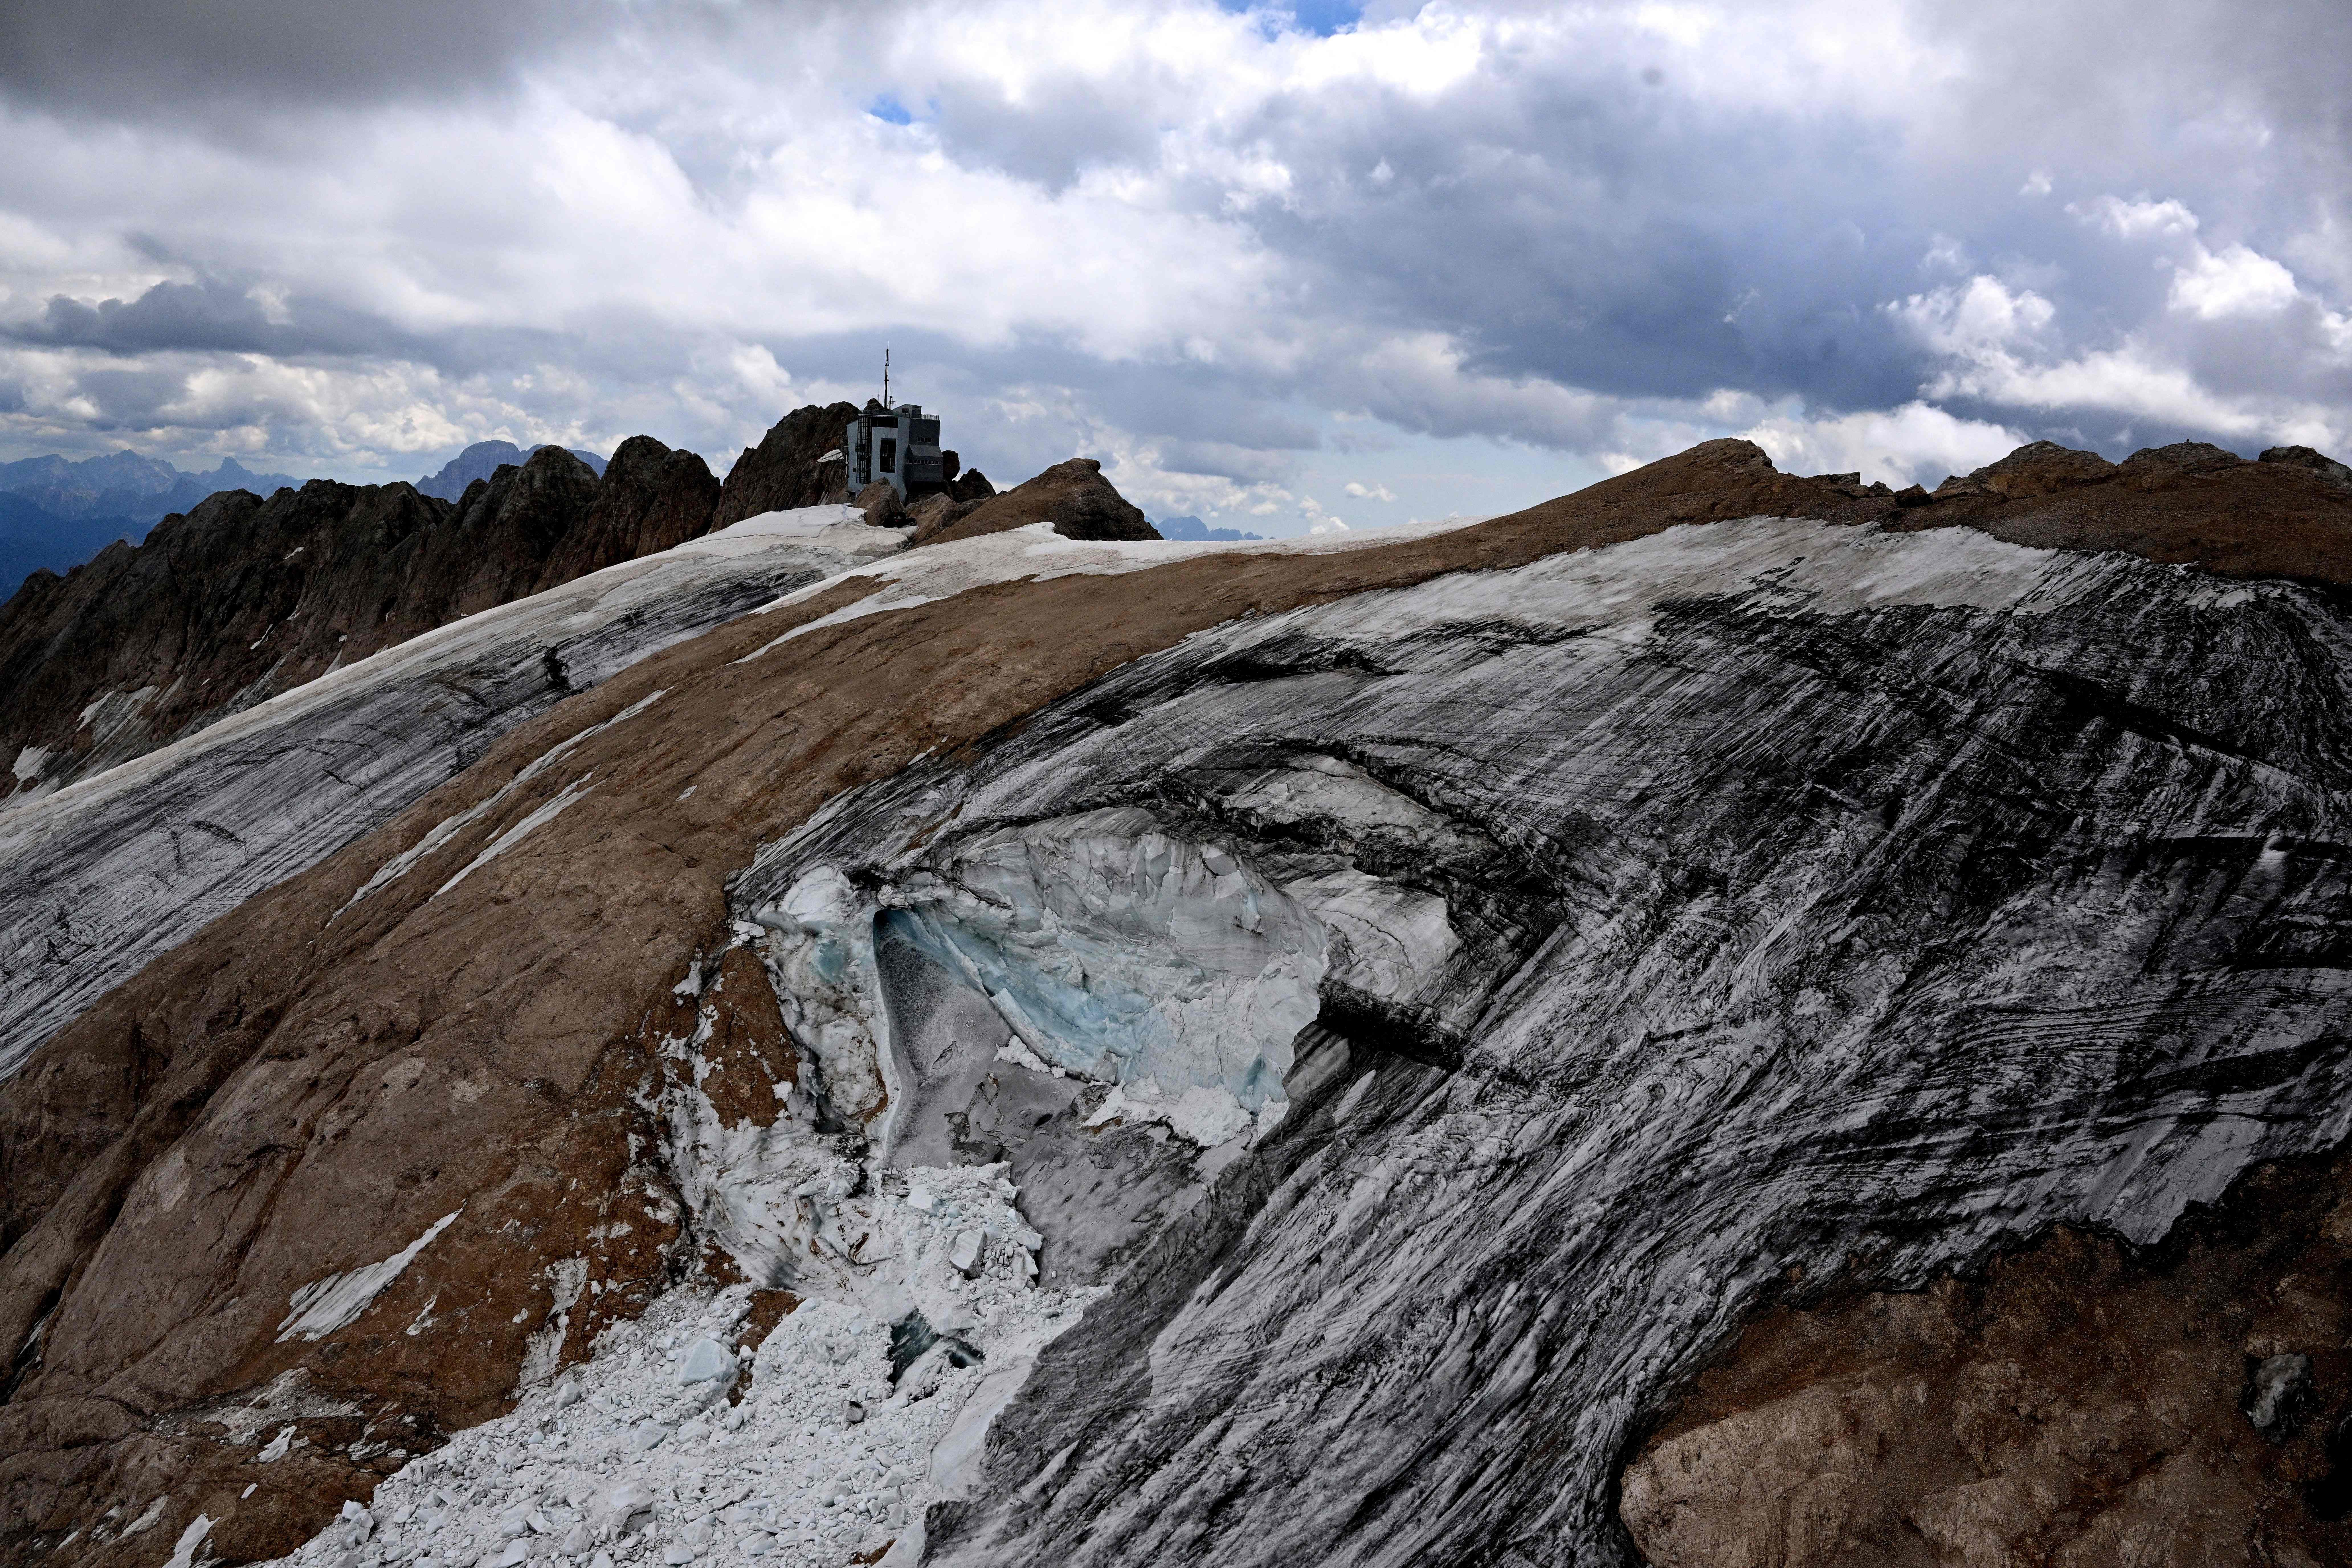 marmolada glacier collapse italian alps heatwaves